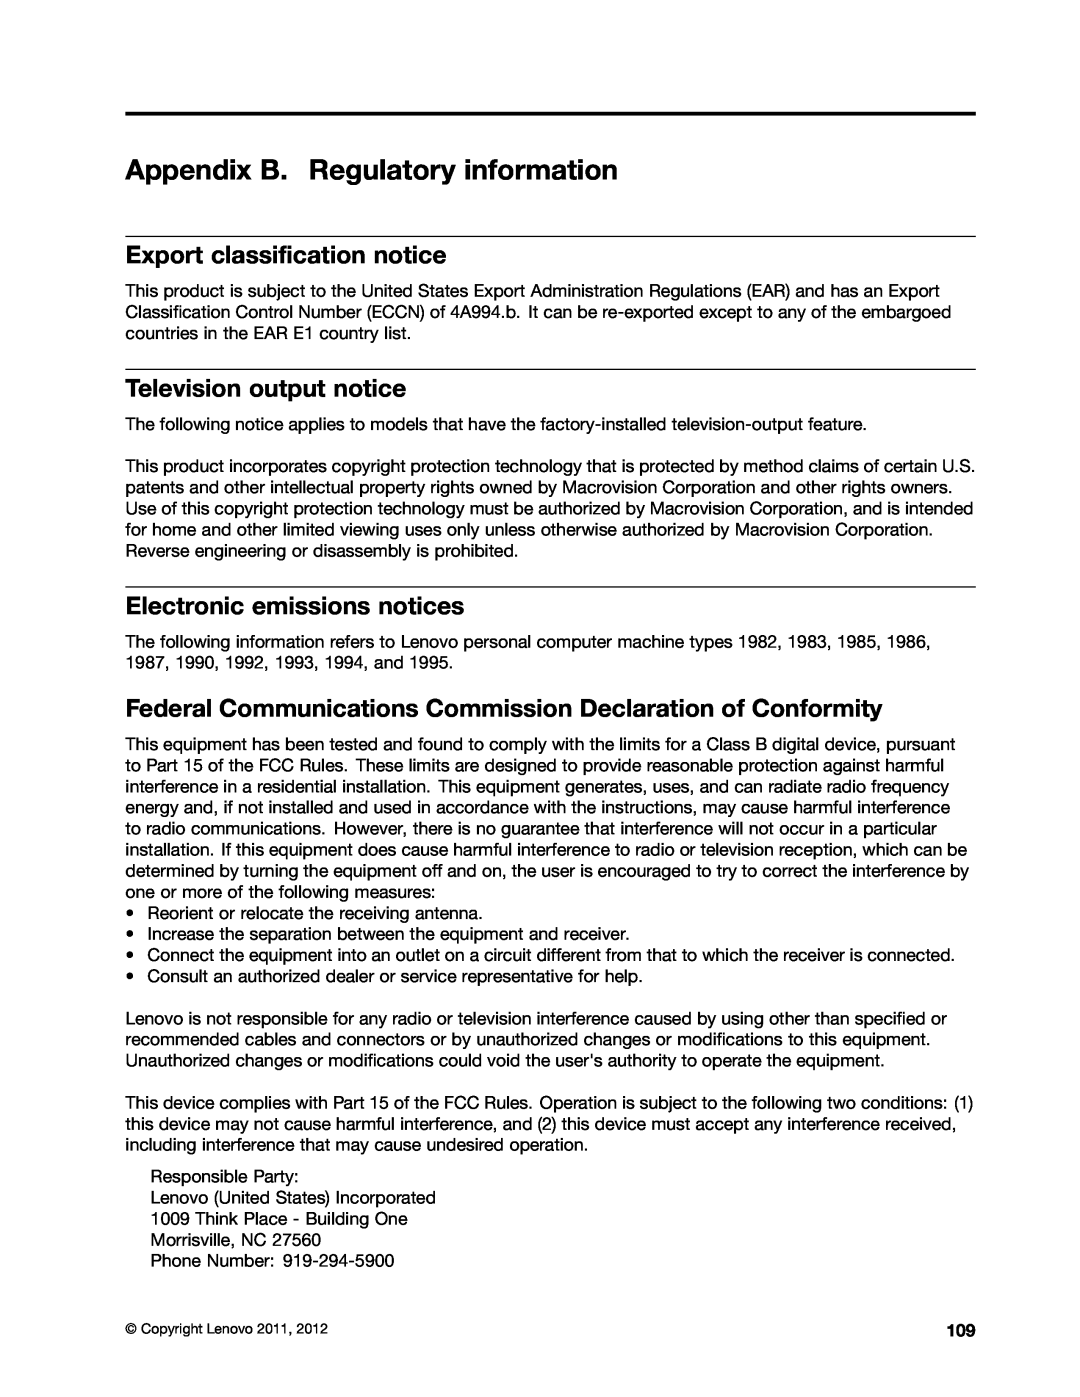 Lenovo 1995, 1993, 1986, 1985 Appendix B. Regulatory information, Export classification notice, Television output notice 